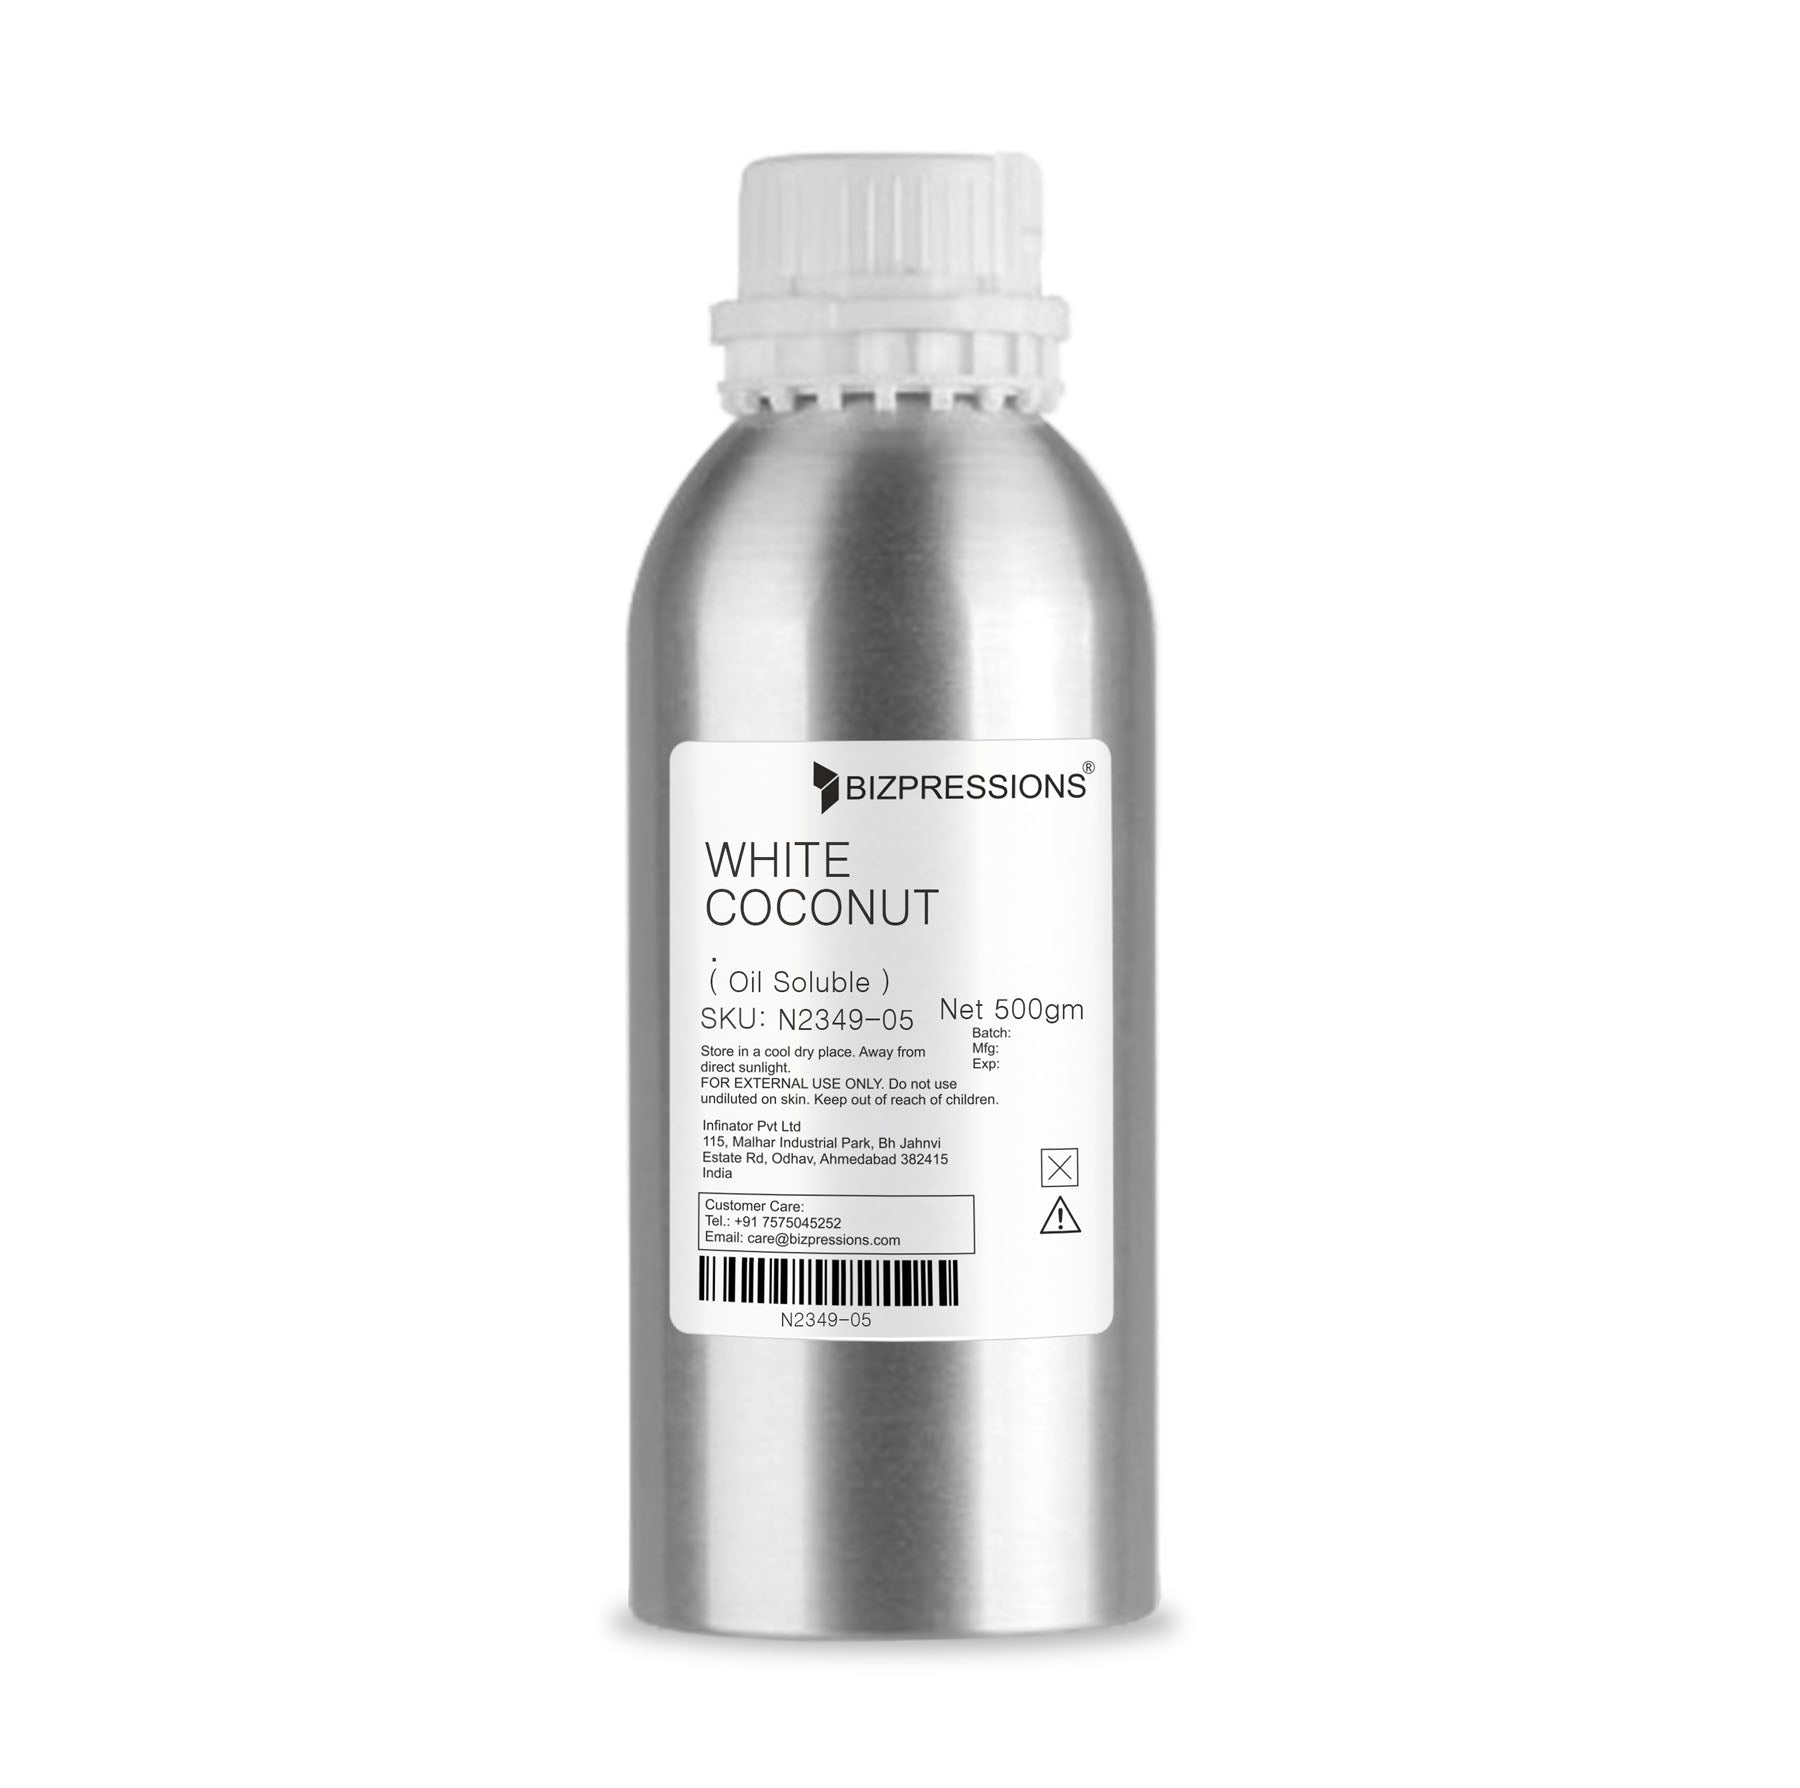 WHITE COCONUT - Fragrance ( Oil Soluble ) - 500 gm